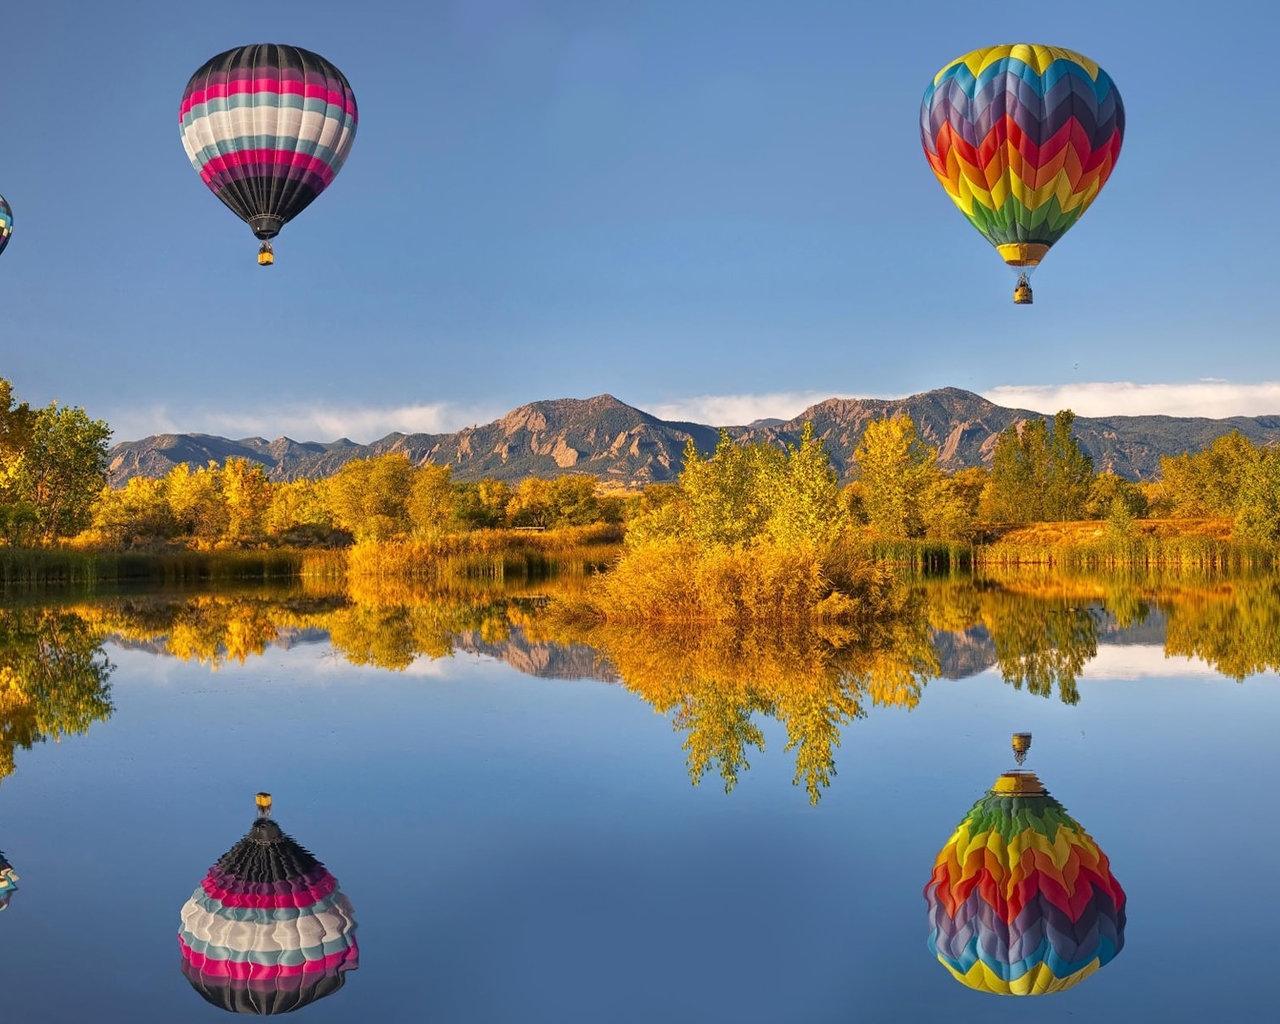 Ballon Race for 1280 x 1024 resolution